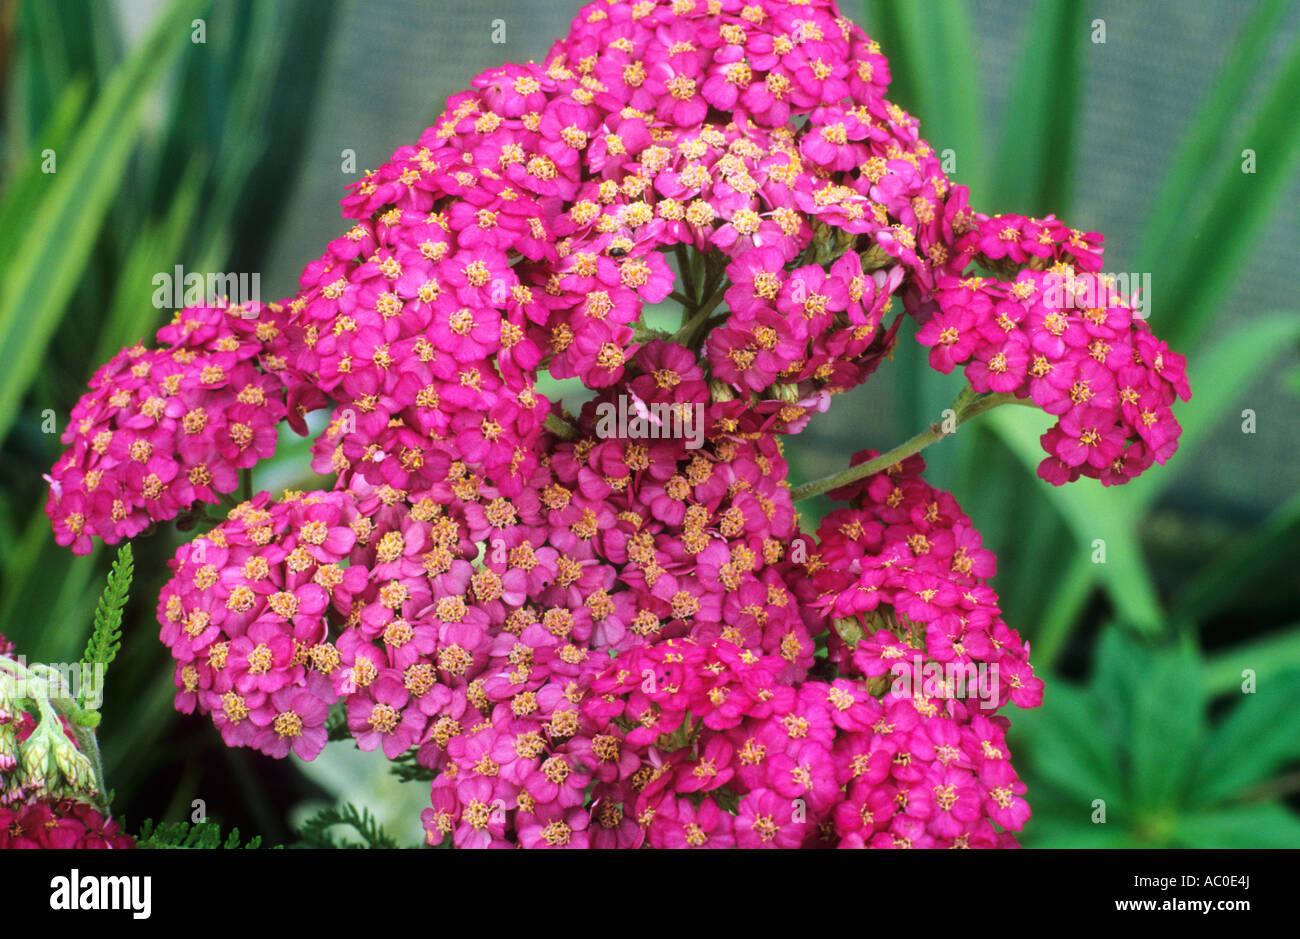 Achillea millefolium 'Apfelblute', syn. A. 'Appleblossom', Yarrow, pink flowers, garden plant achilleas plants flower Stock Photo